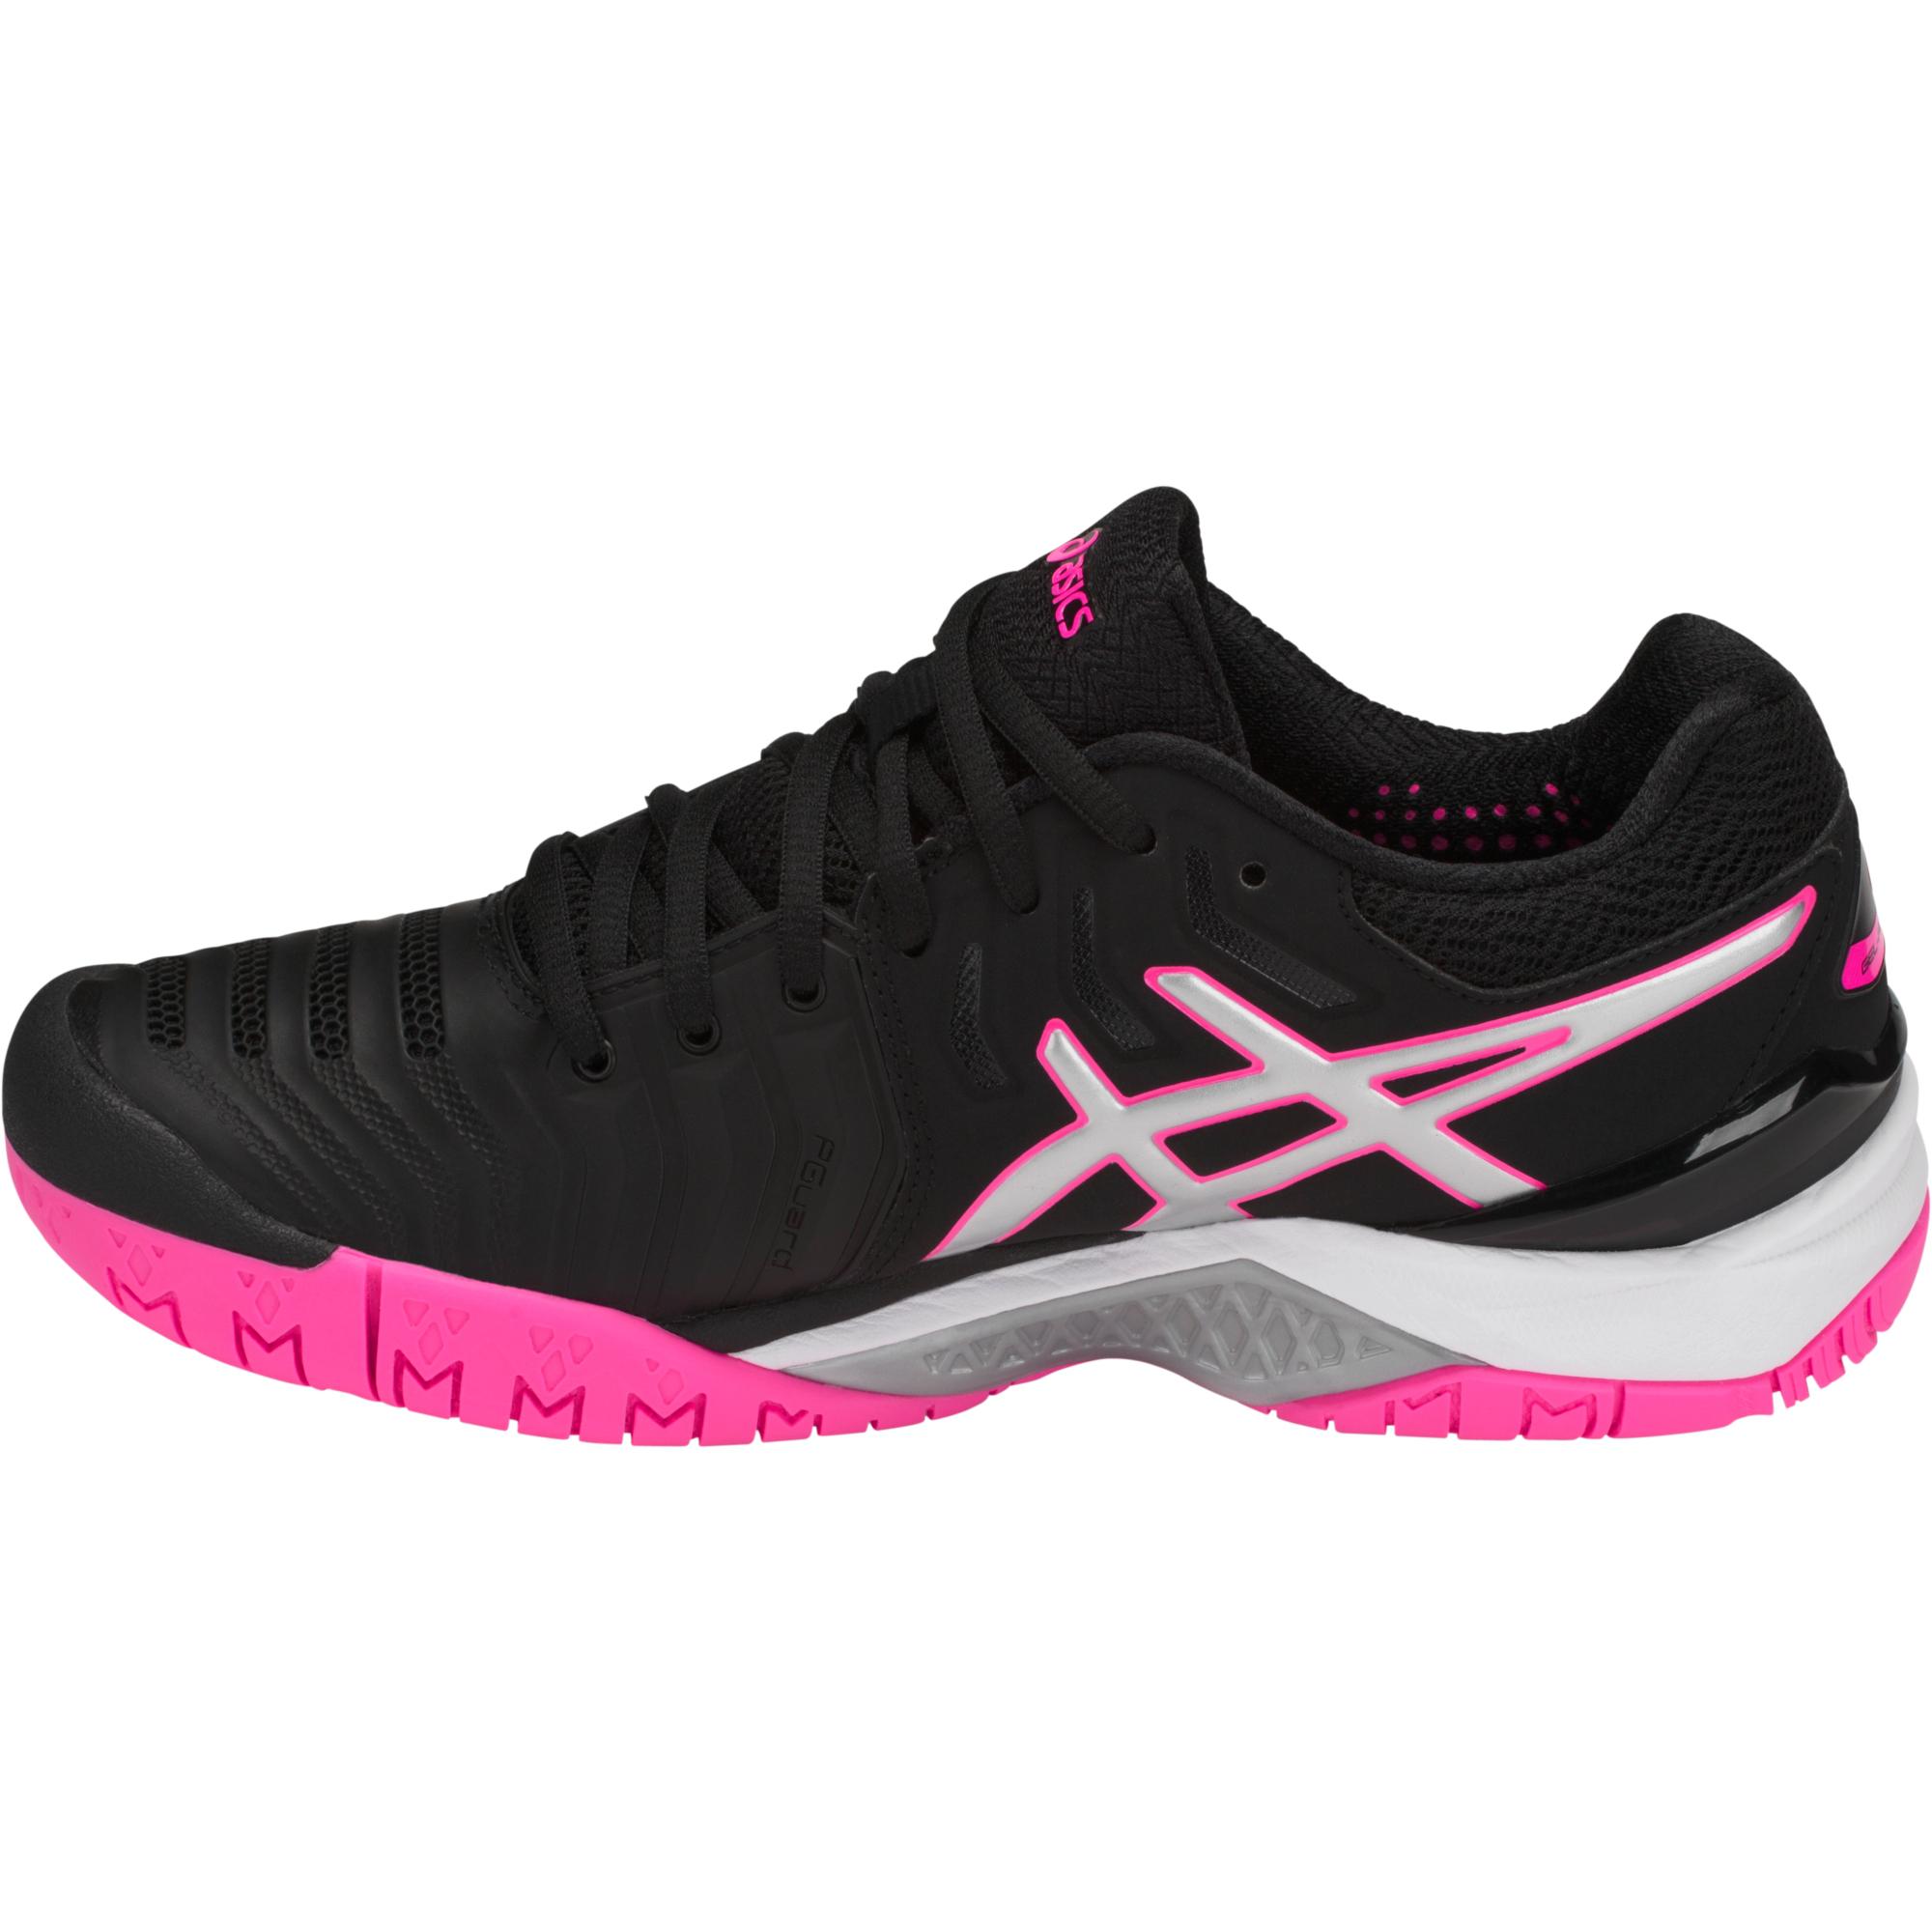 Asics Womens GEL-Resolution 7 Tennis Shoes - Black/Silver/Hot Pink ...